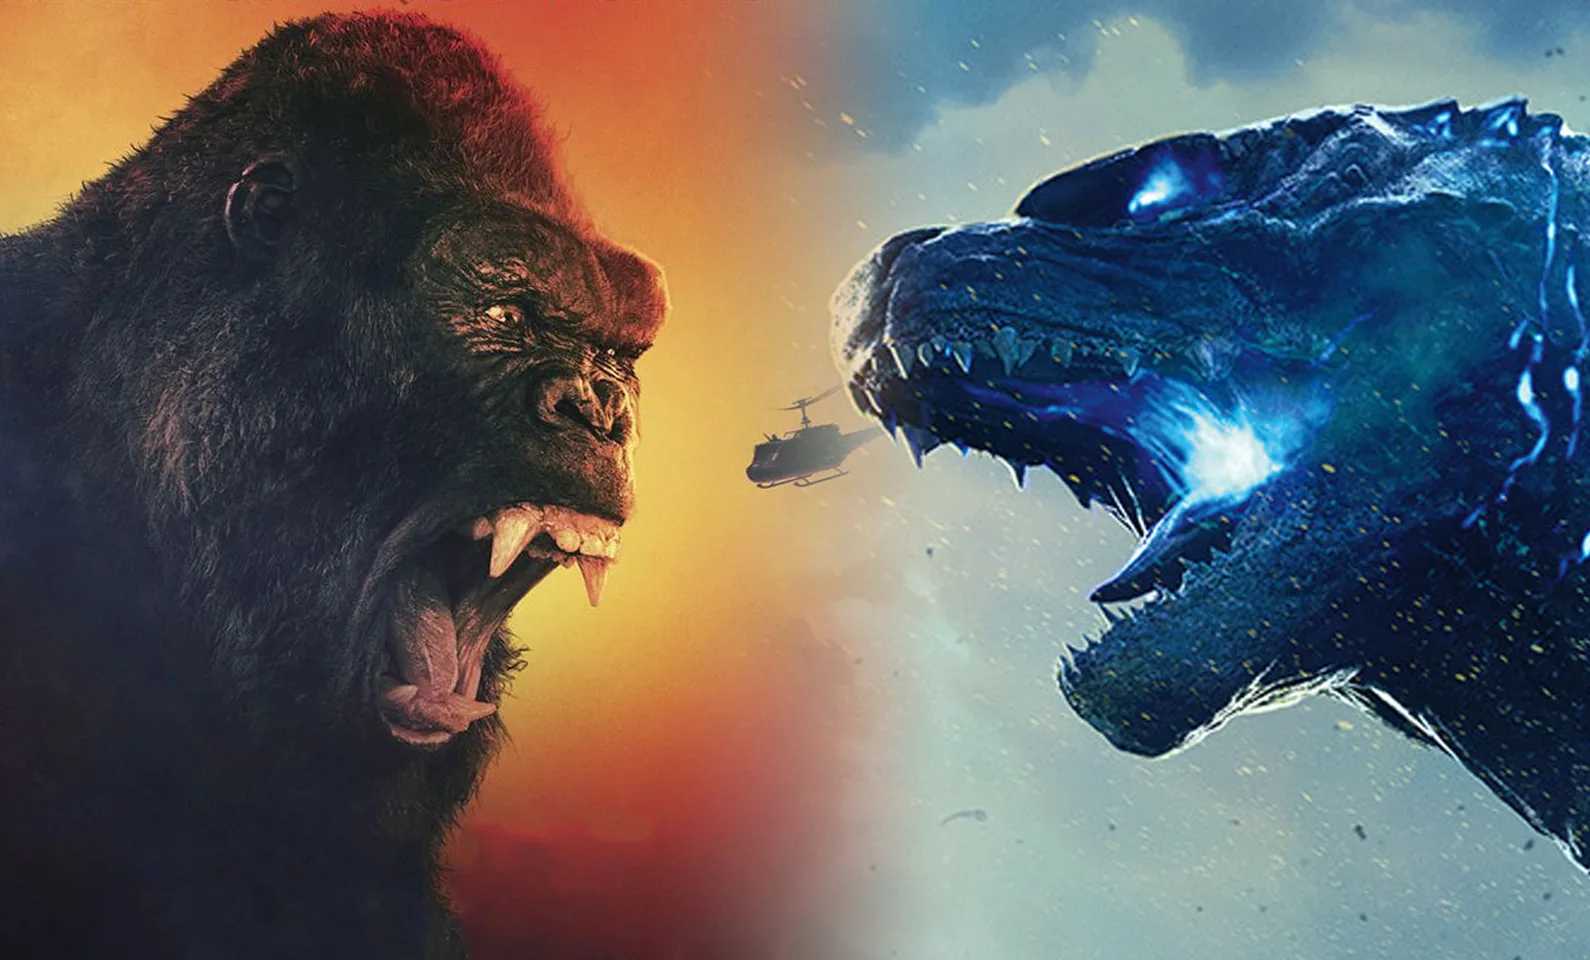 Kong v Godzilla